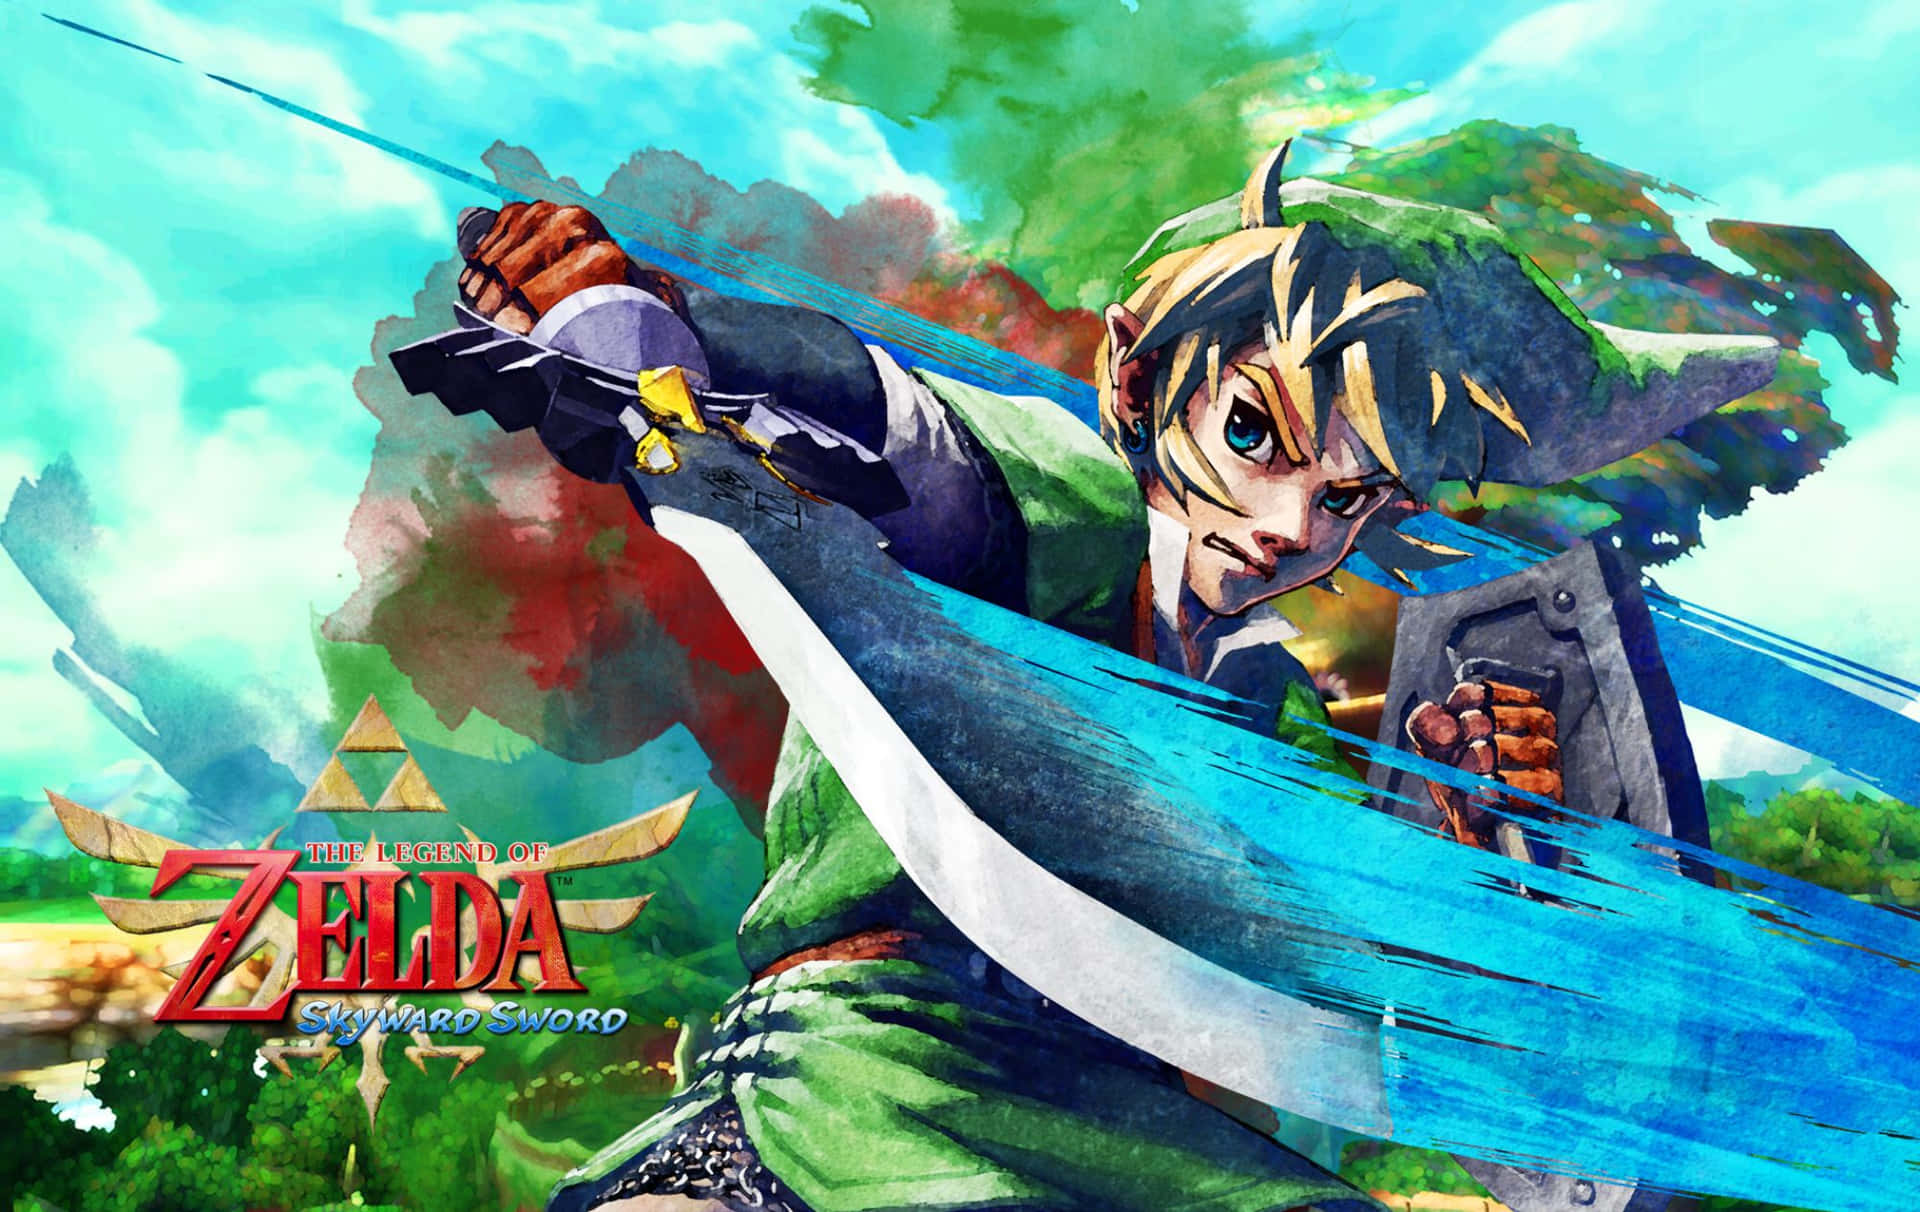 Link and Zelda embarking on an adventure in the vibrant world of Skyward Sword Wallpaper